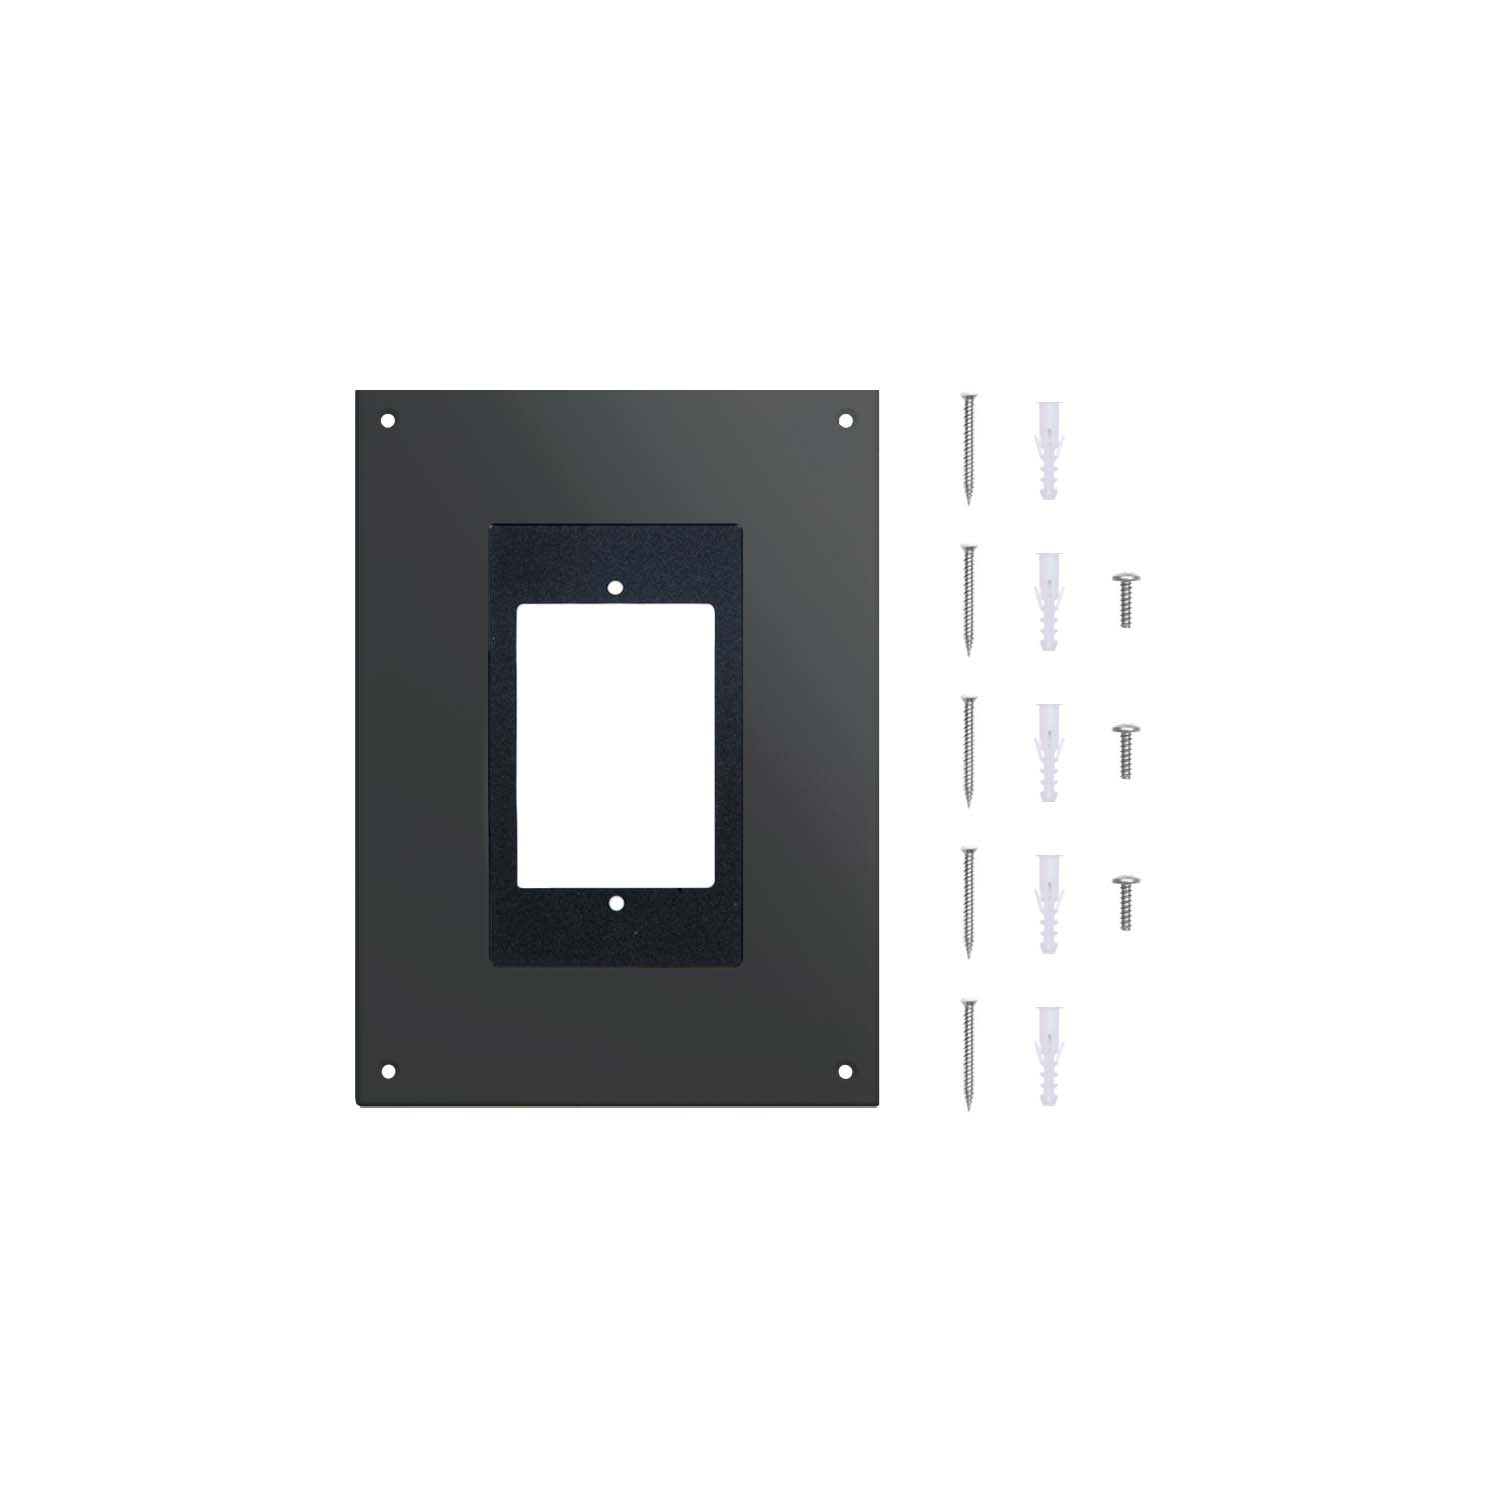 Intercom Kit (for Video Doorbell Elite) - Black